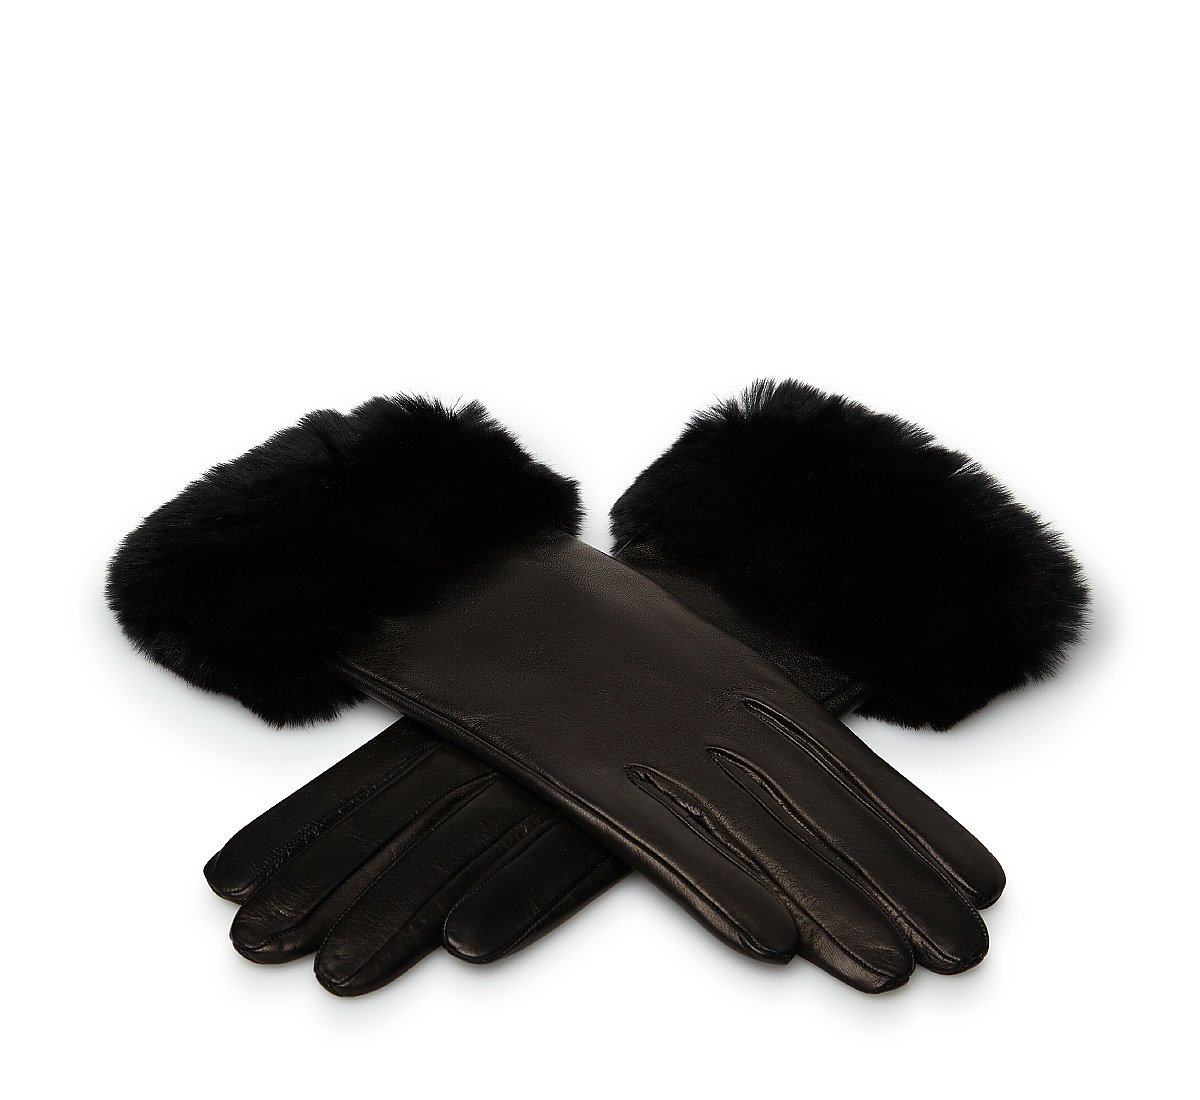 Black gloves with fur trim